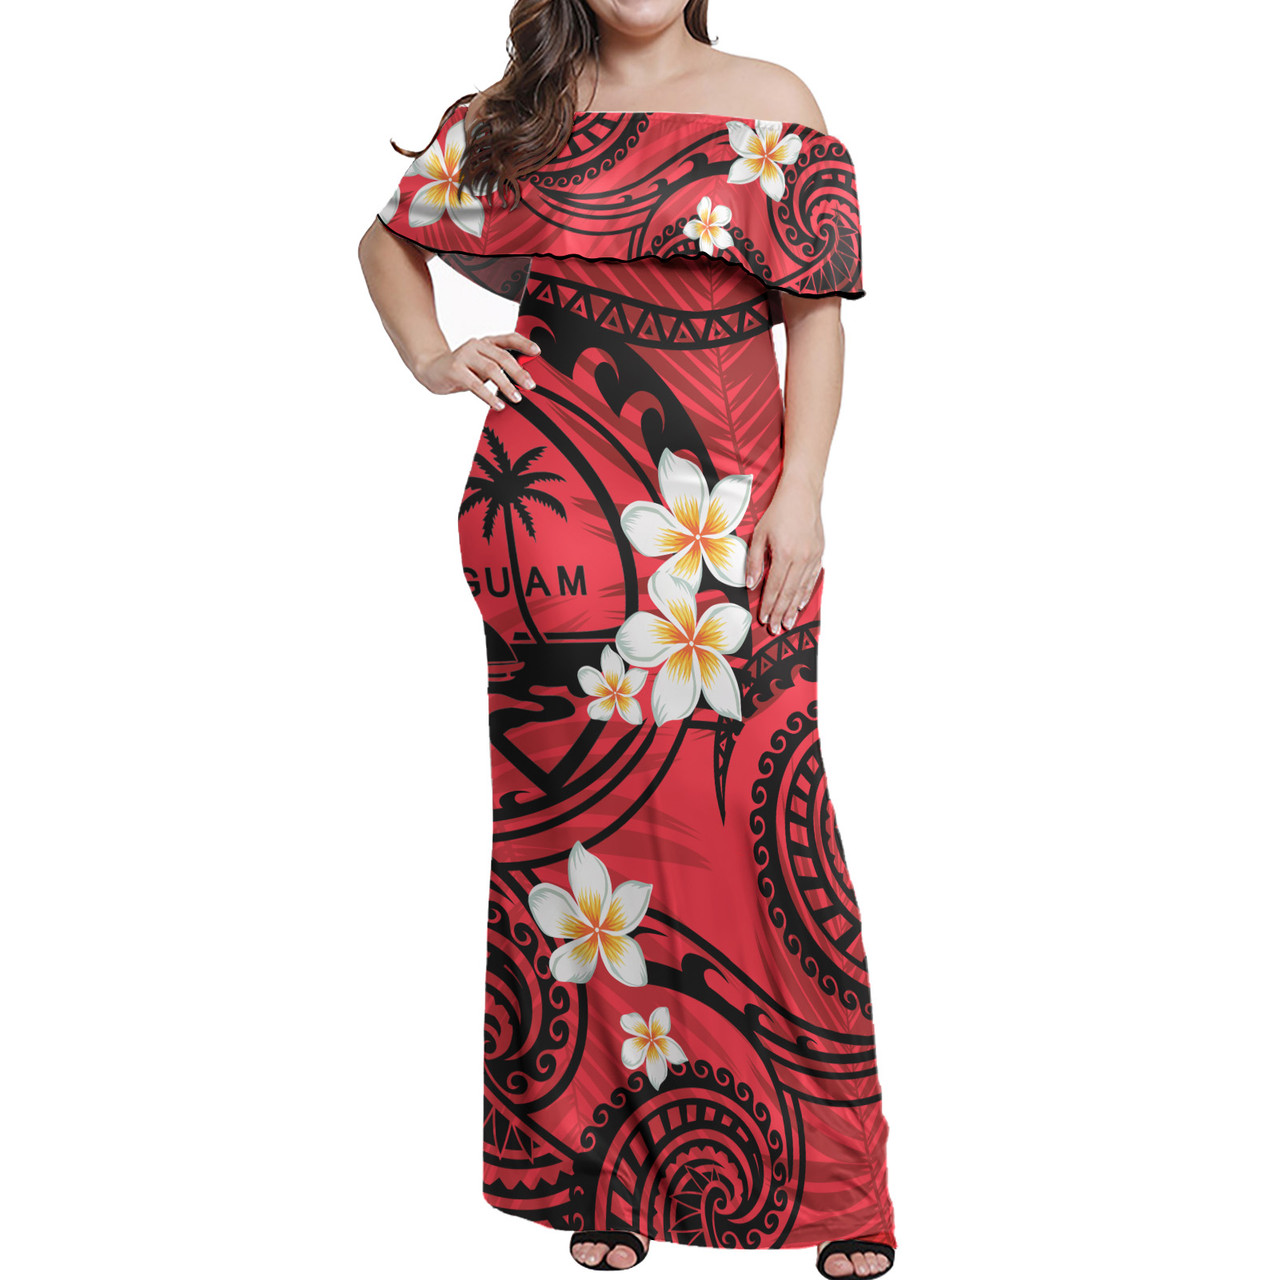 Guam Off Shoulder Long Dress Plumeria Flowers Tribal Motif Red Version